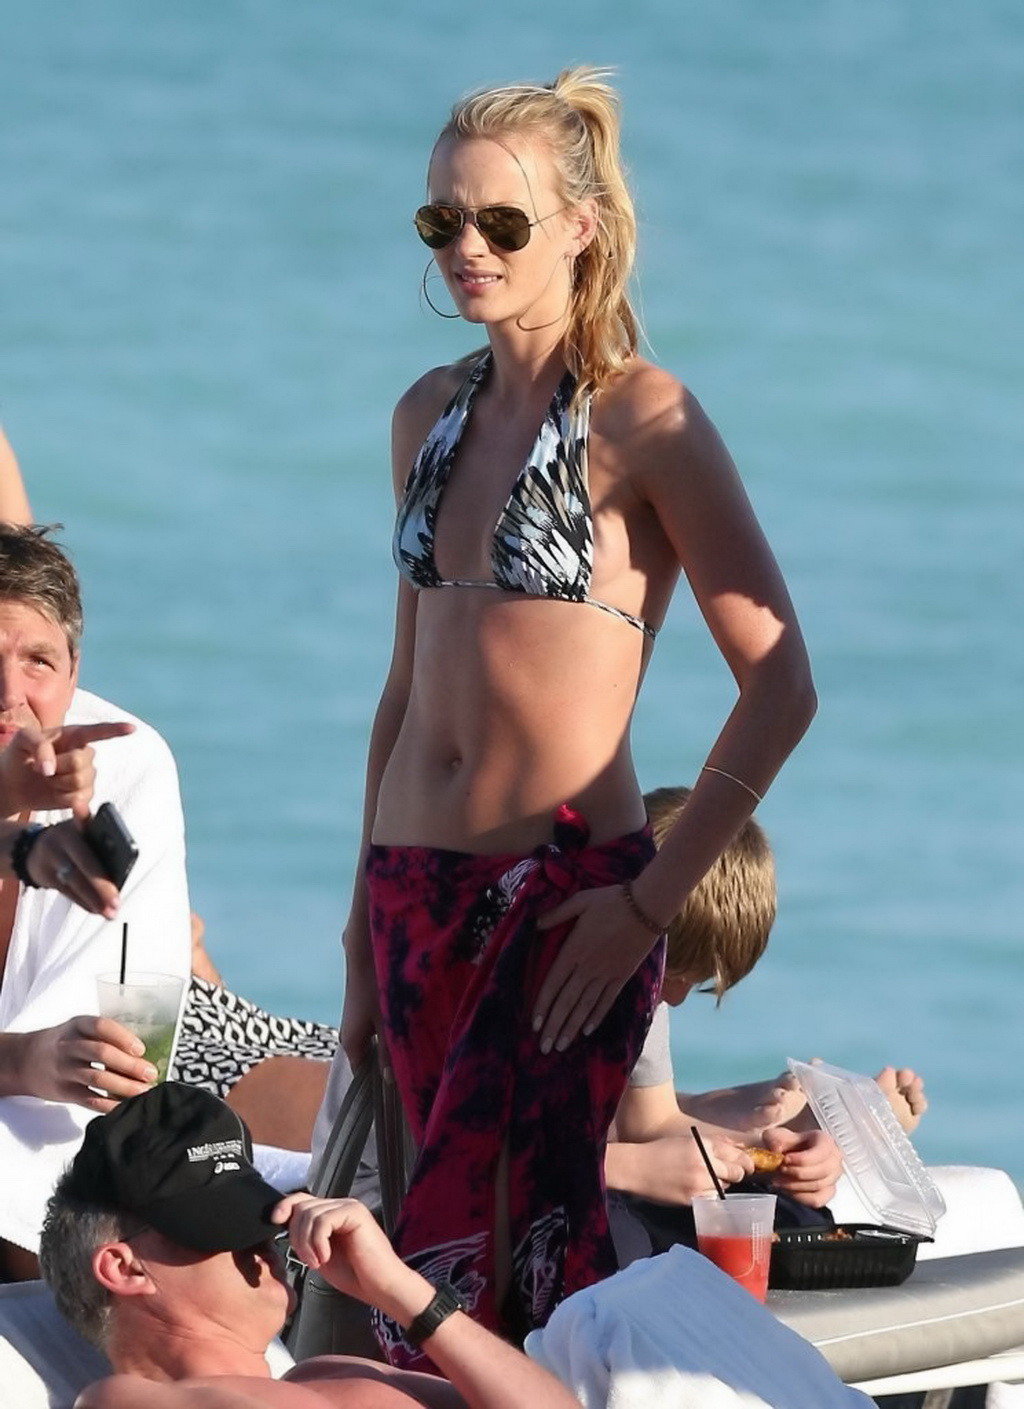 Anne vyalitsyna con un bikini ultra diminuto multicolor en la playa de miami
 #75247611